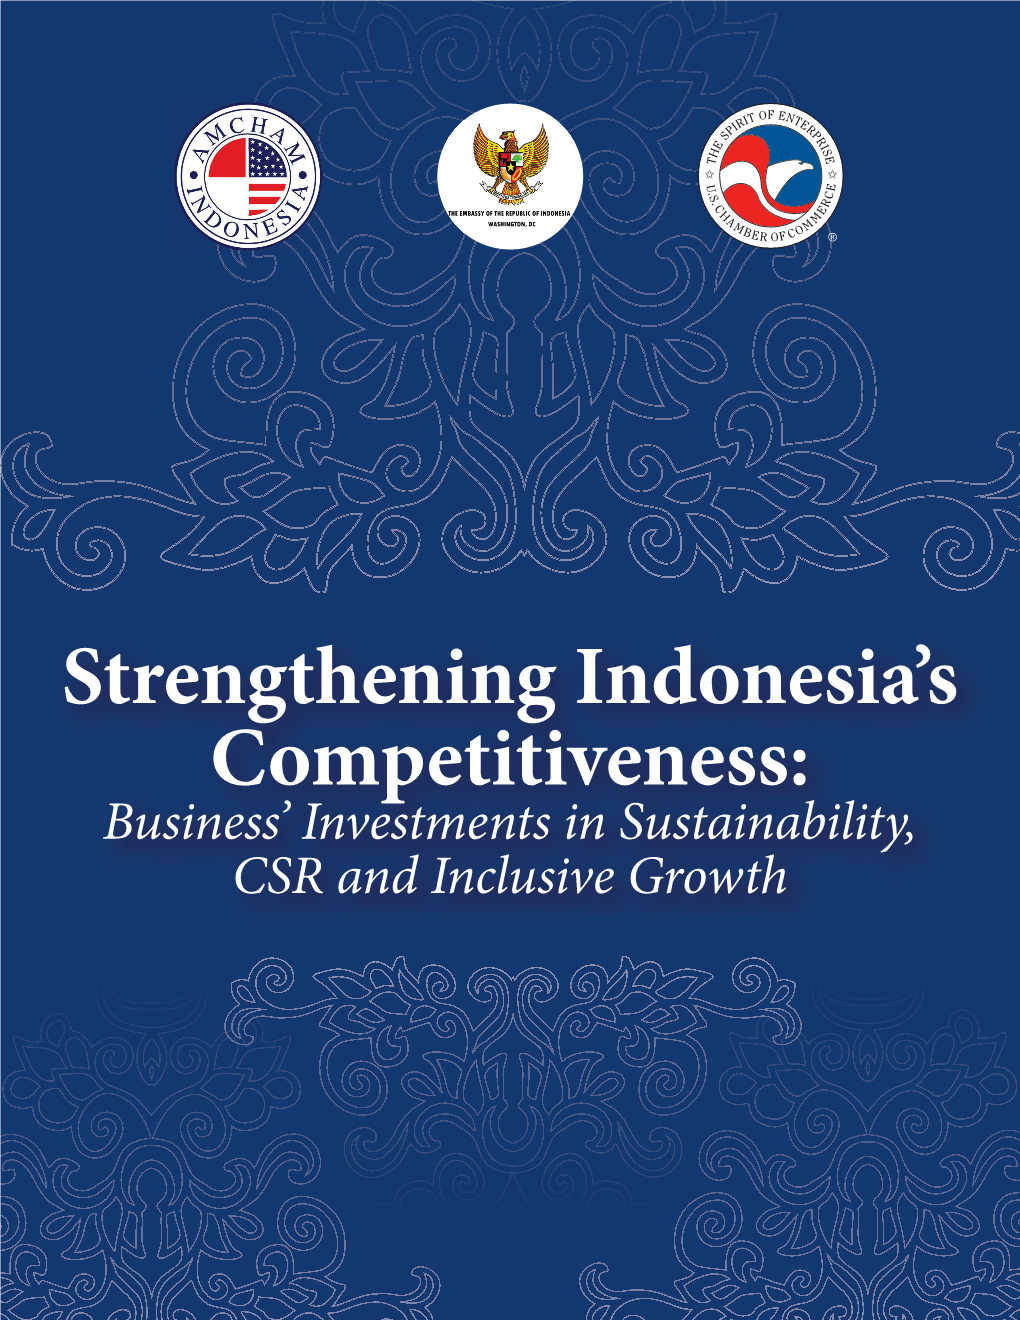 Companies' CSR Practices in Indonesia